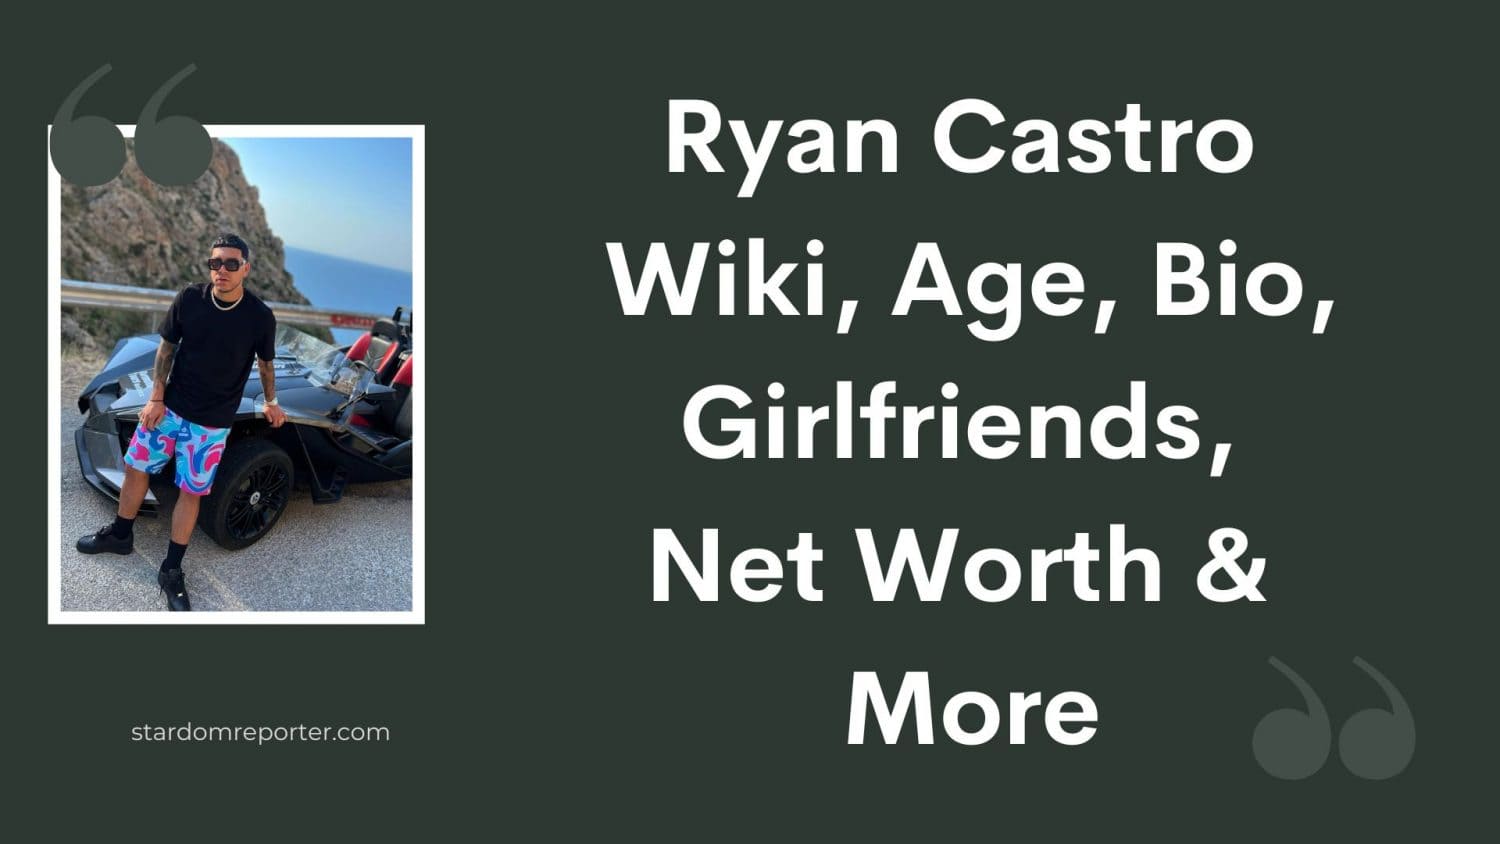 Ryan Castro Wiki, Age, Bio, Girlfriends, Net Worth & More - 19